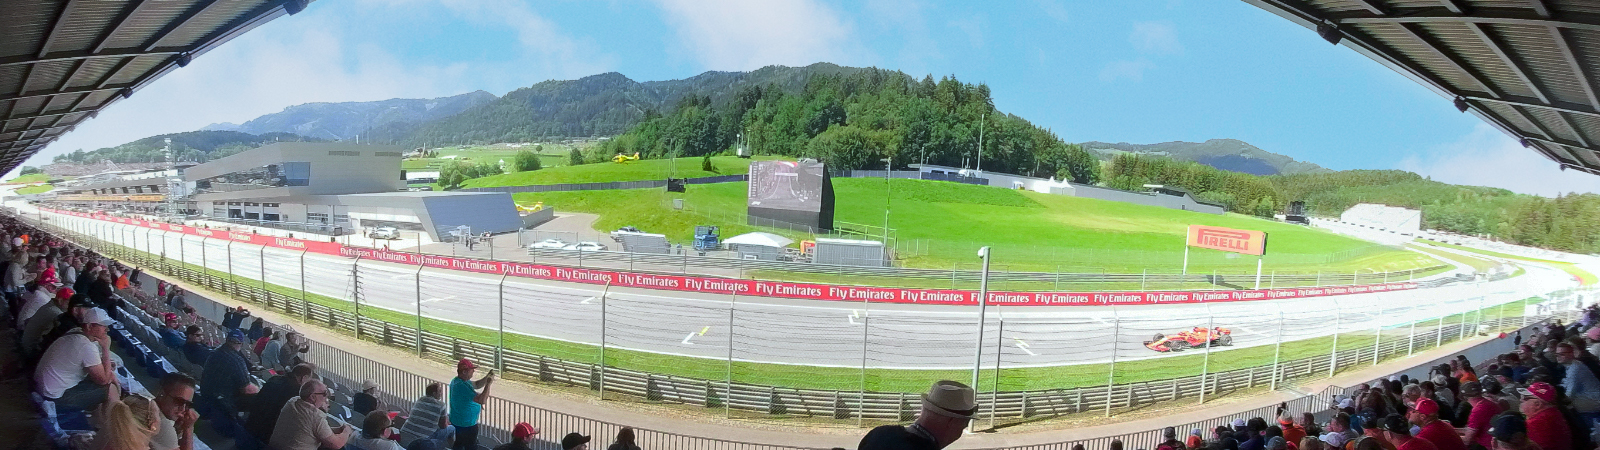 Vstupenka 3 Corner Steiermark | F1 Rakousko 2023 | Red Bull Ring | Spielberg | Oficilání vstupenky | www.F1austria.com